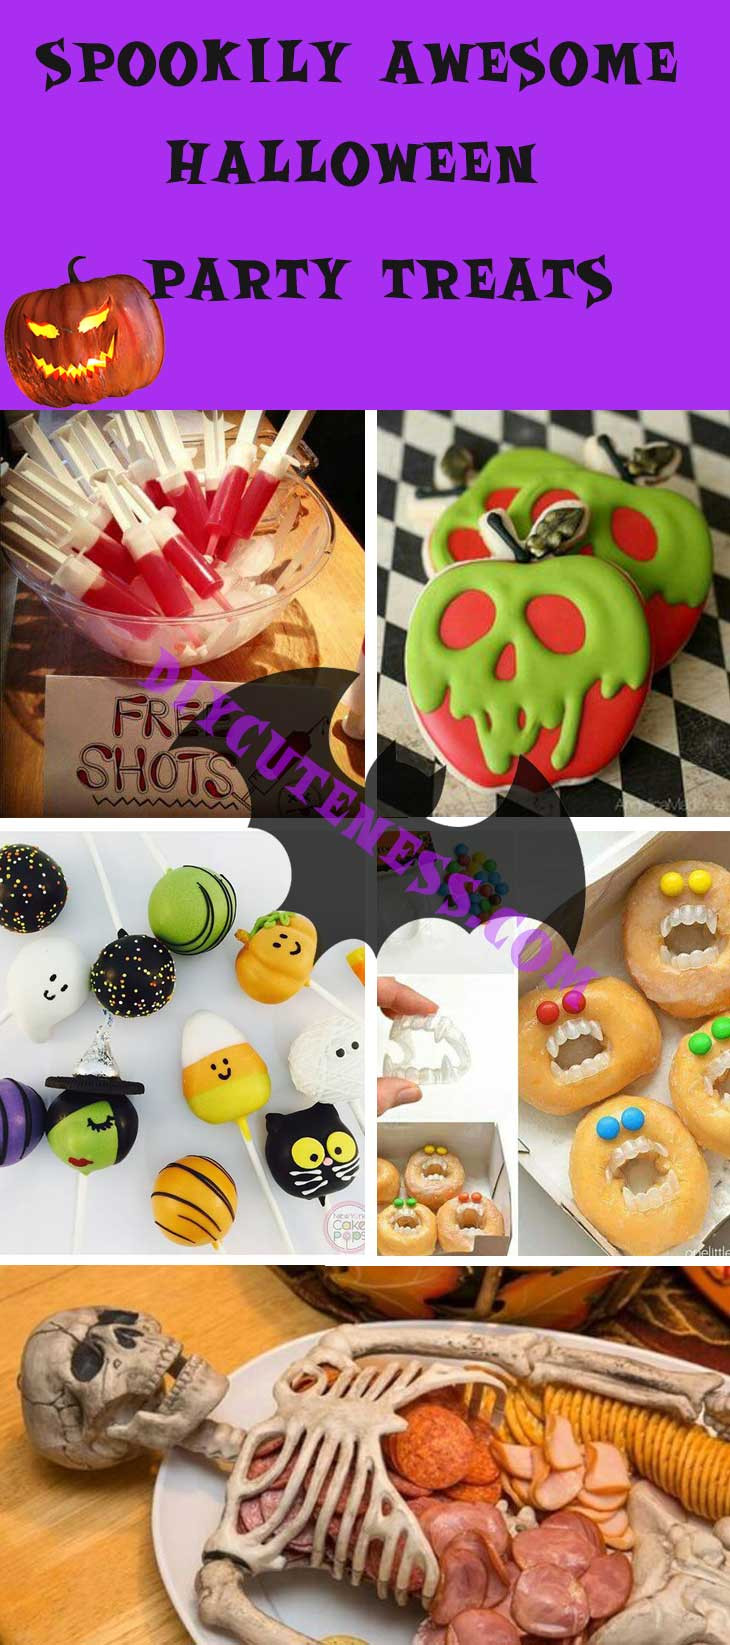 Adult Halloween Party Food Ideas
 Spooky Halloween Party Food Ideas for Adults DIY Cuteness